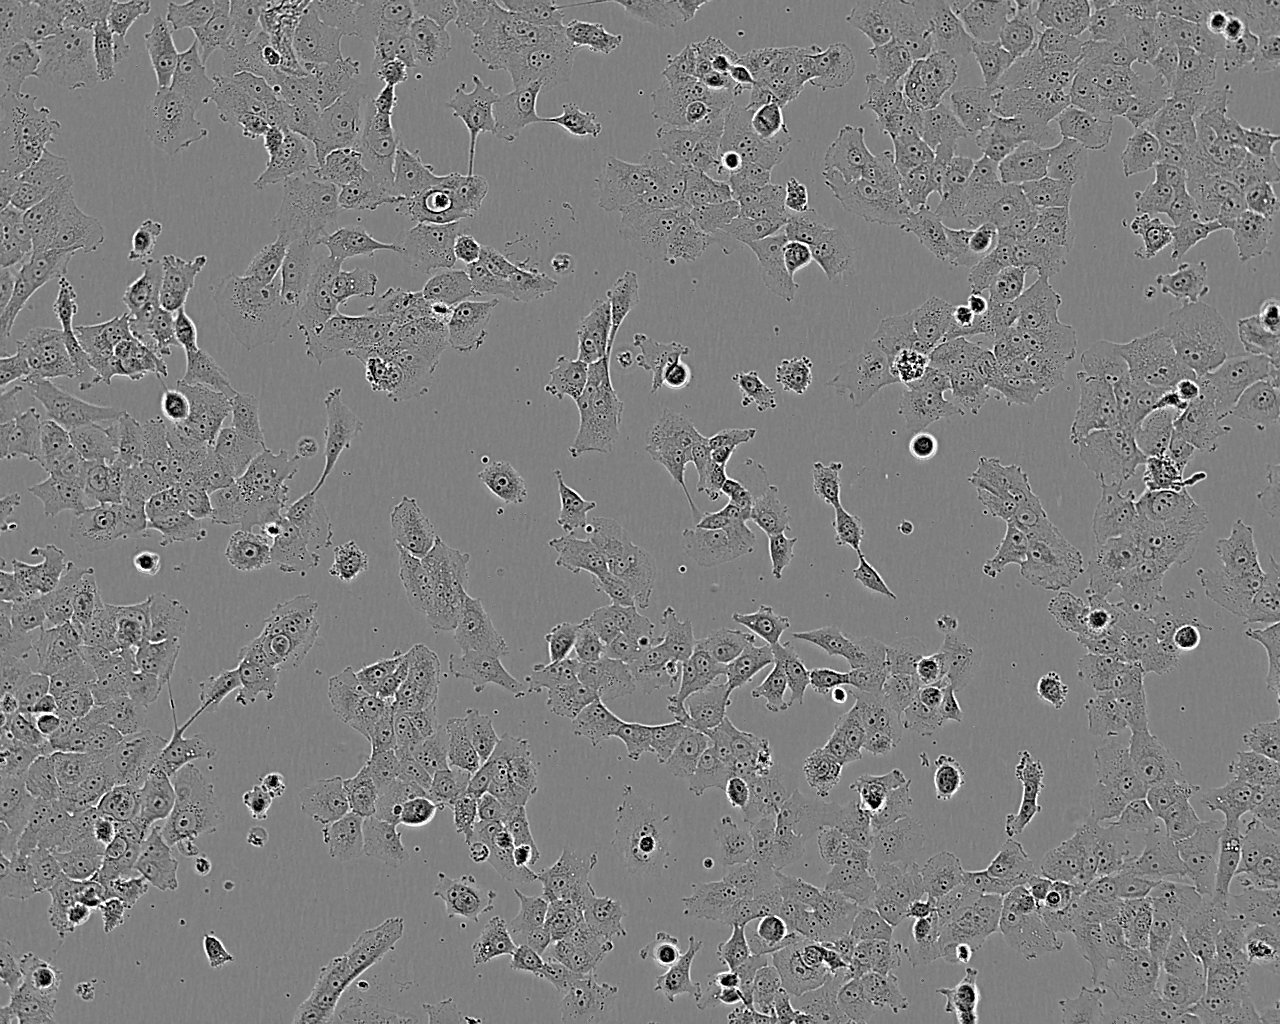 NMC-G1 epithelioid cells人脑胶质细胞系